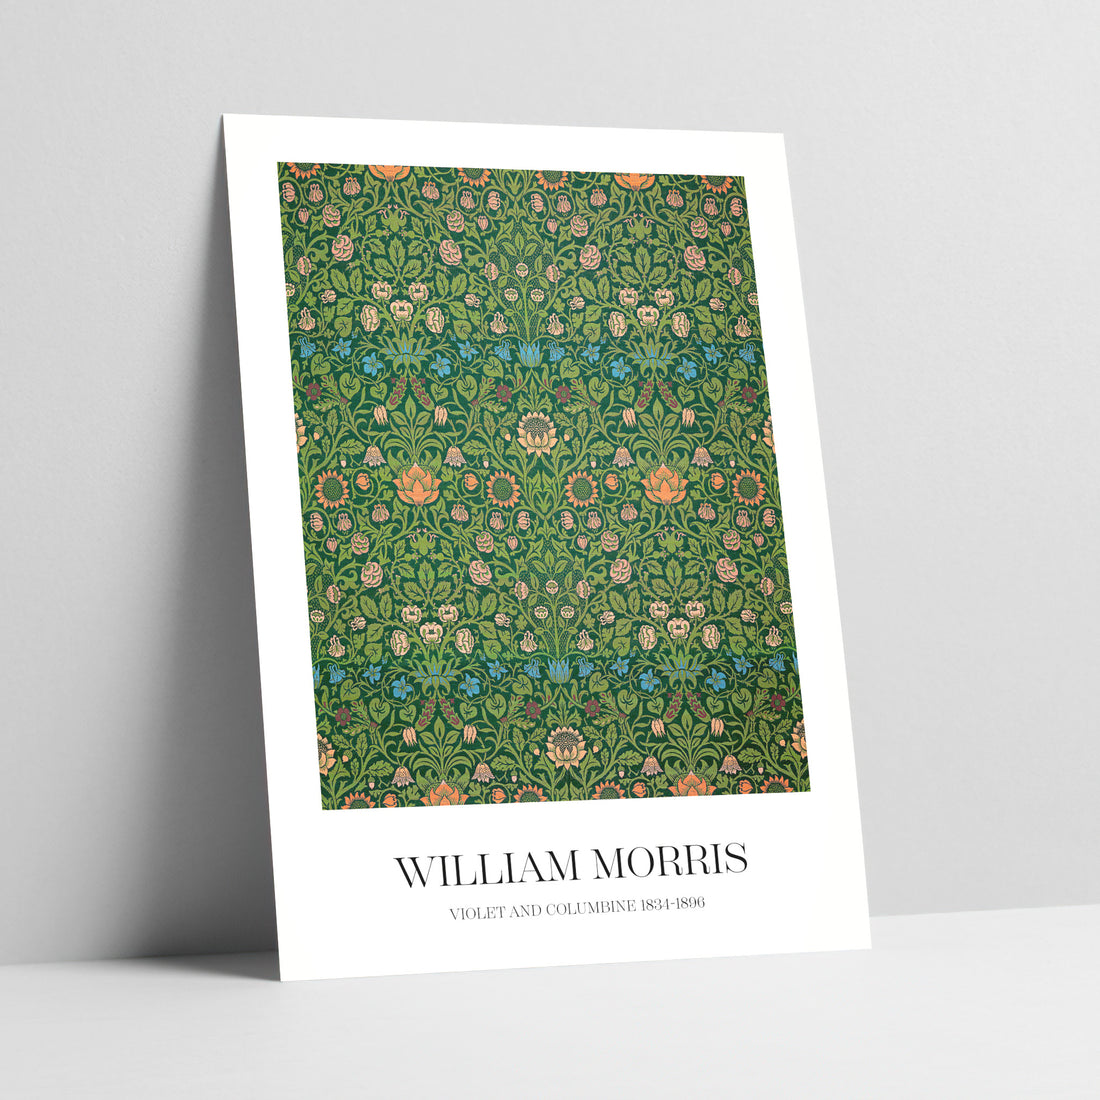 William Morris Violet and Columbine Gallery Art Print